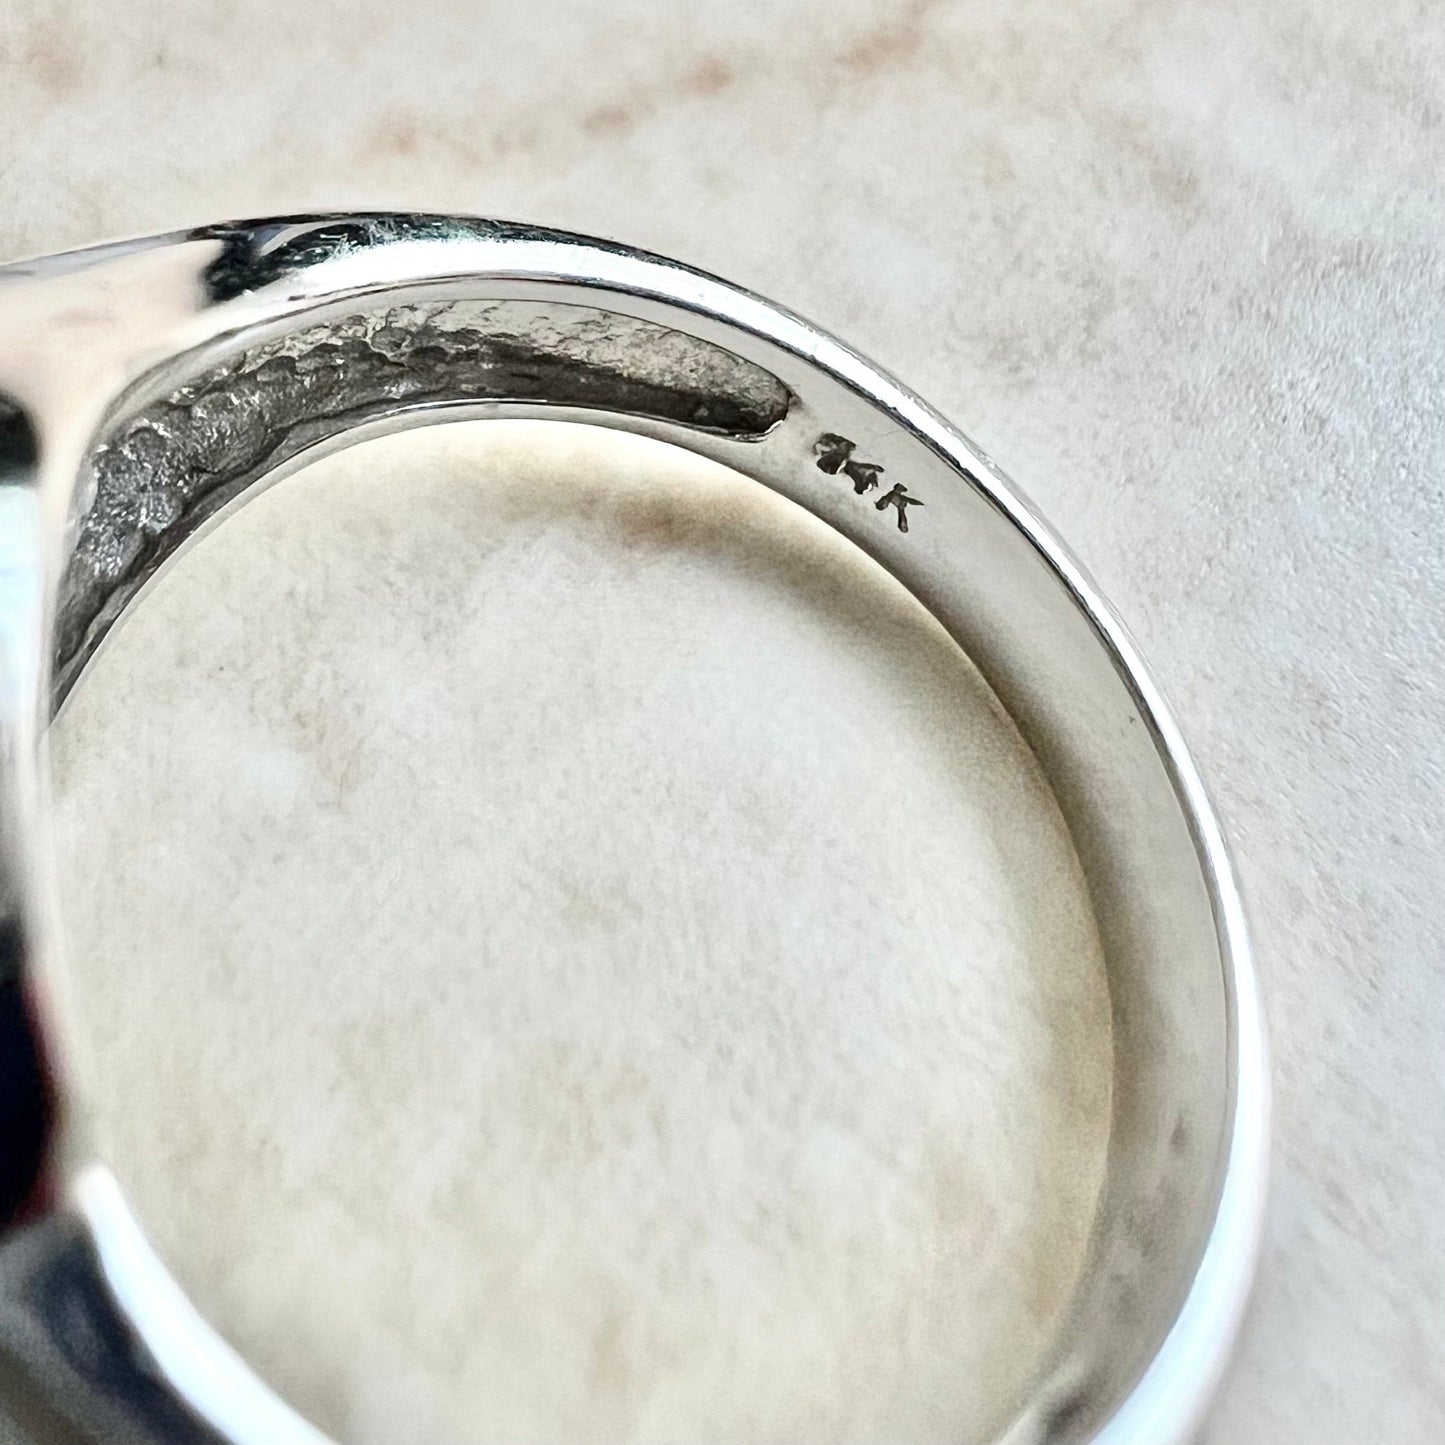 14K Calla Lily Diamond & Tsavorite Garnet Cocktail Ring - White Gold Tsavorite Garnet Ring - Flower Ring - Statement Ring - Gifts For Her